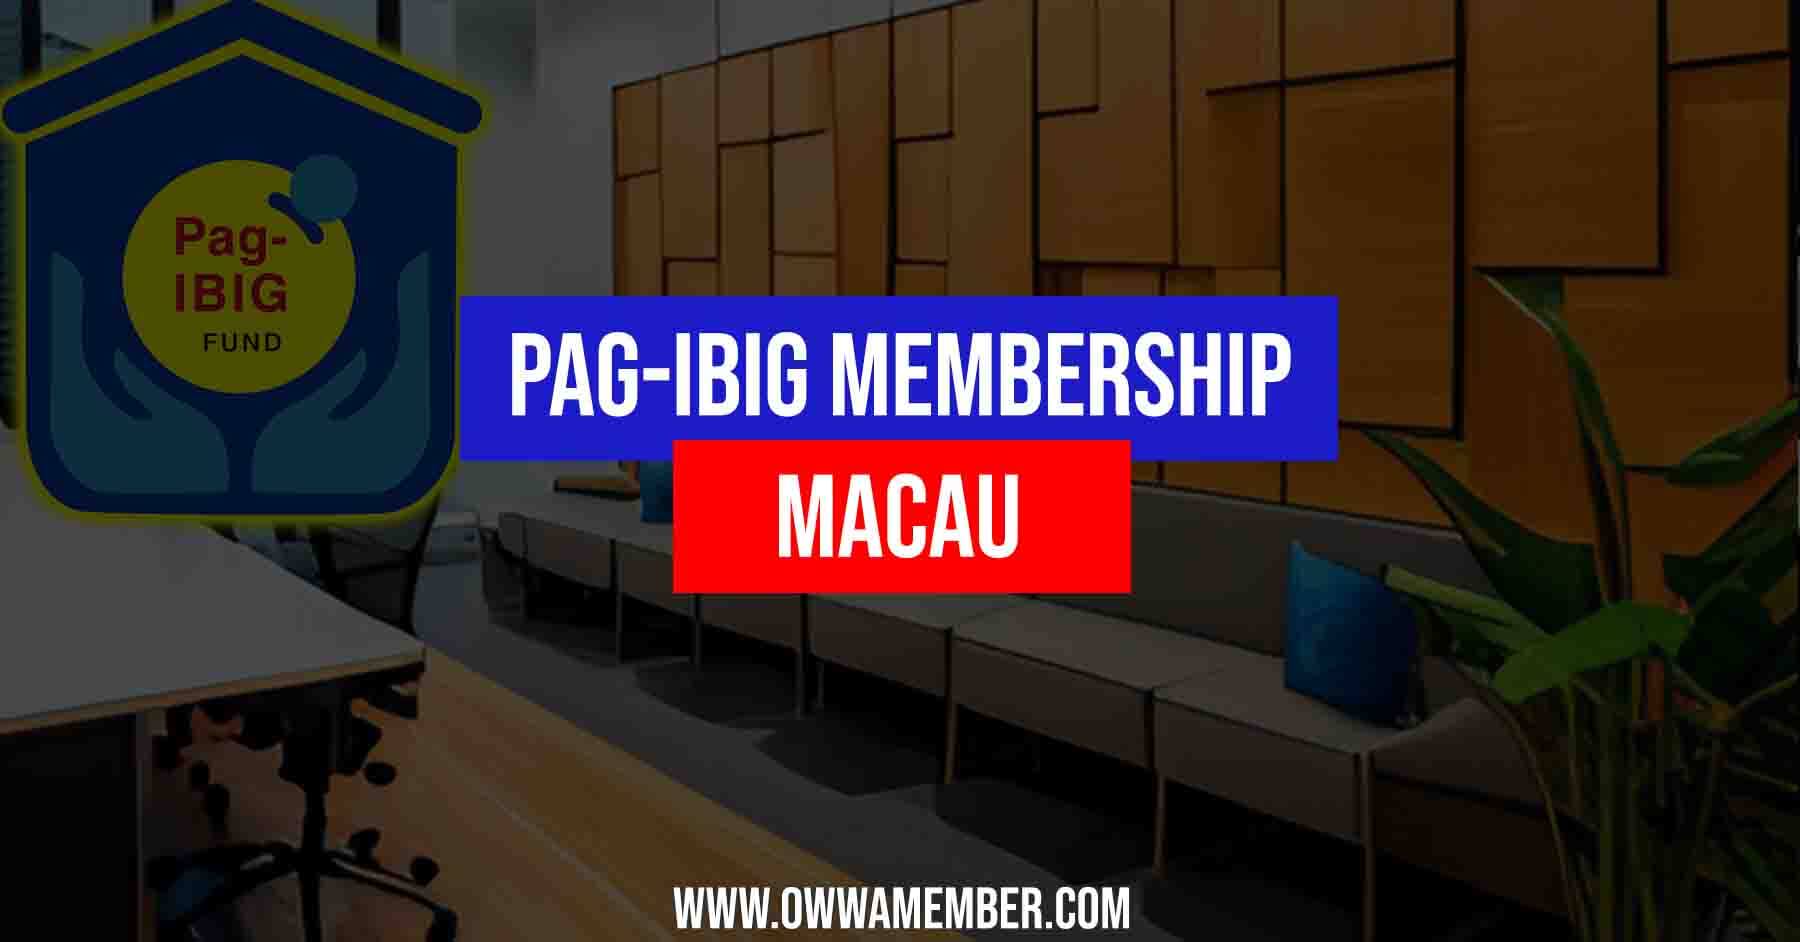 apply pagibig membership in macau